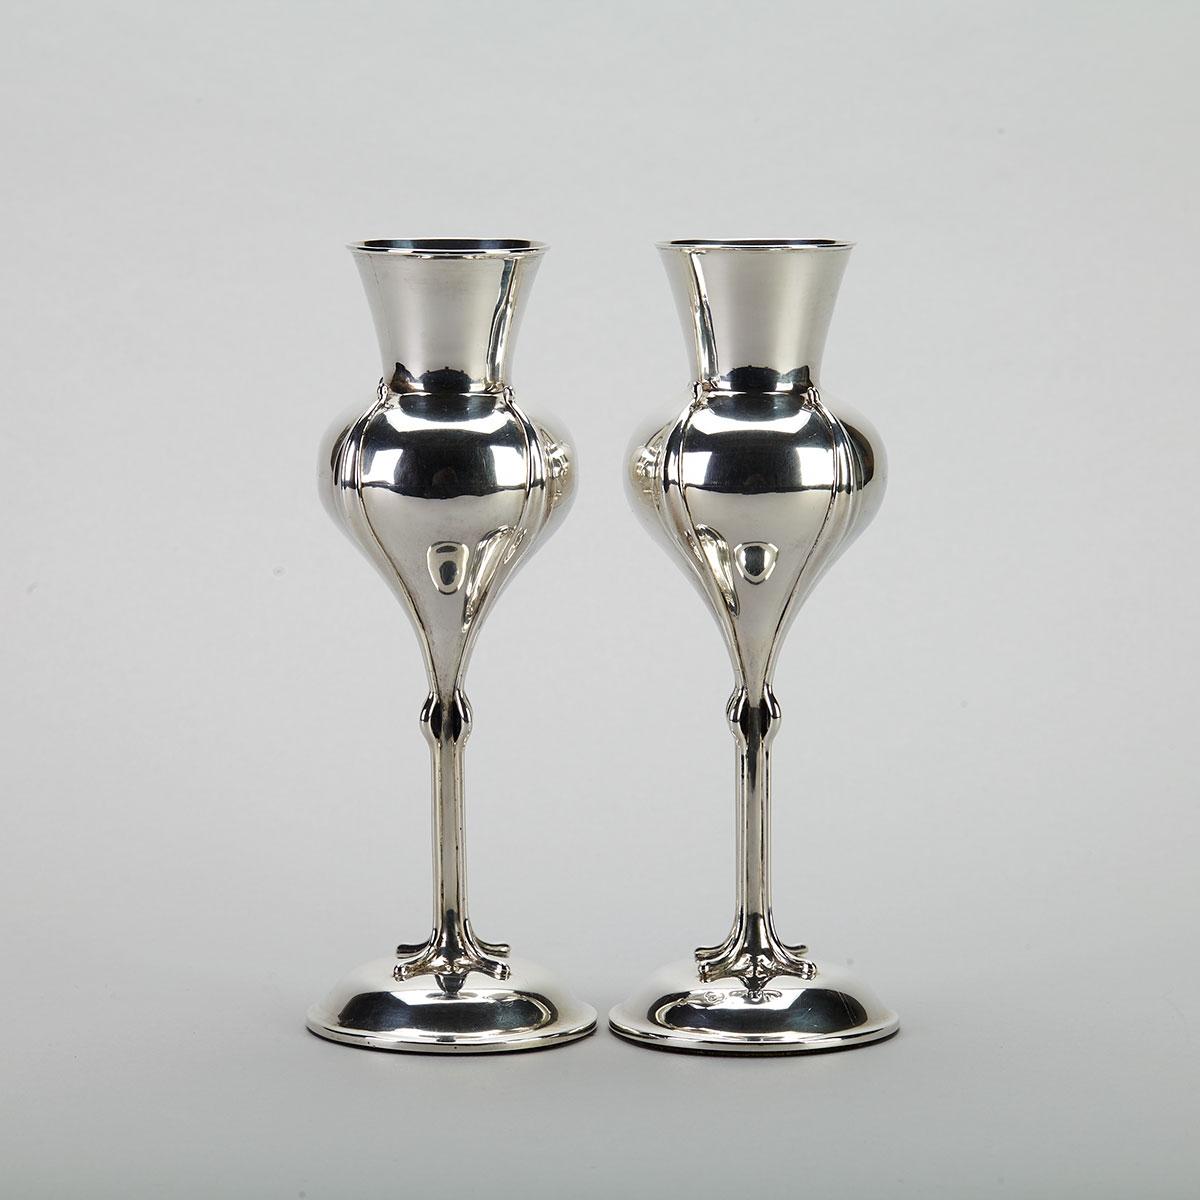 Pair of English Art Nouveau Silver Vases, Goldsmiths & Silversmiths Co., London, 1900